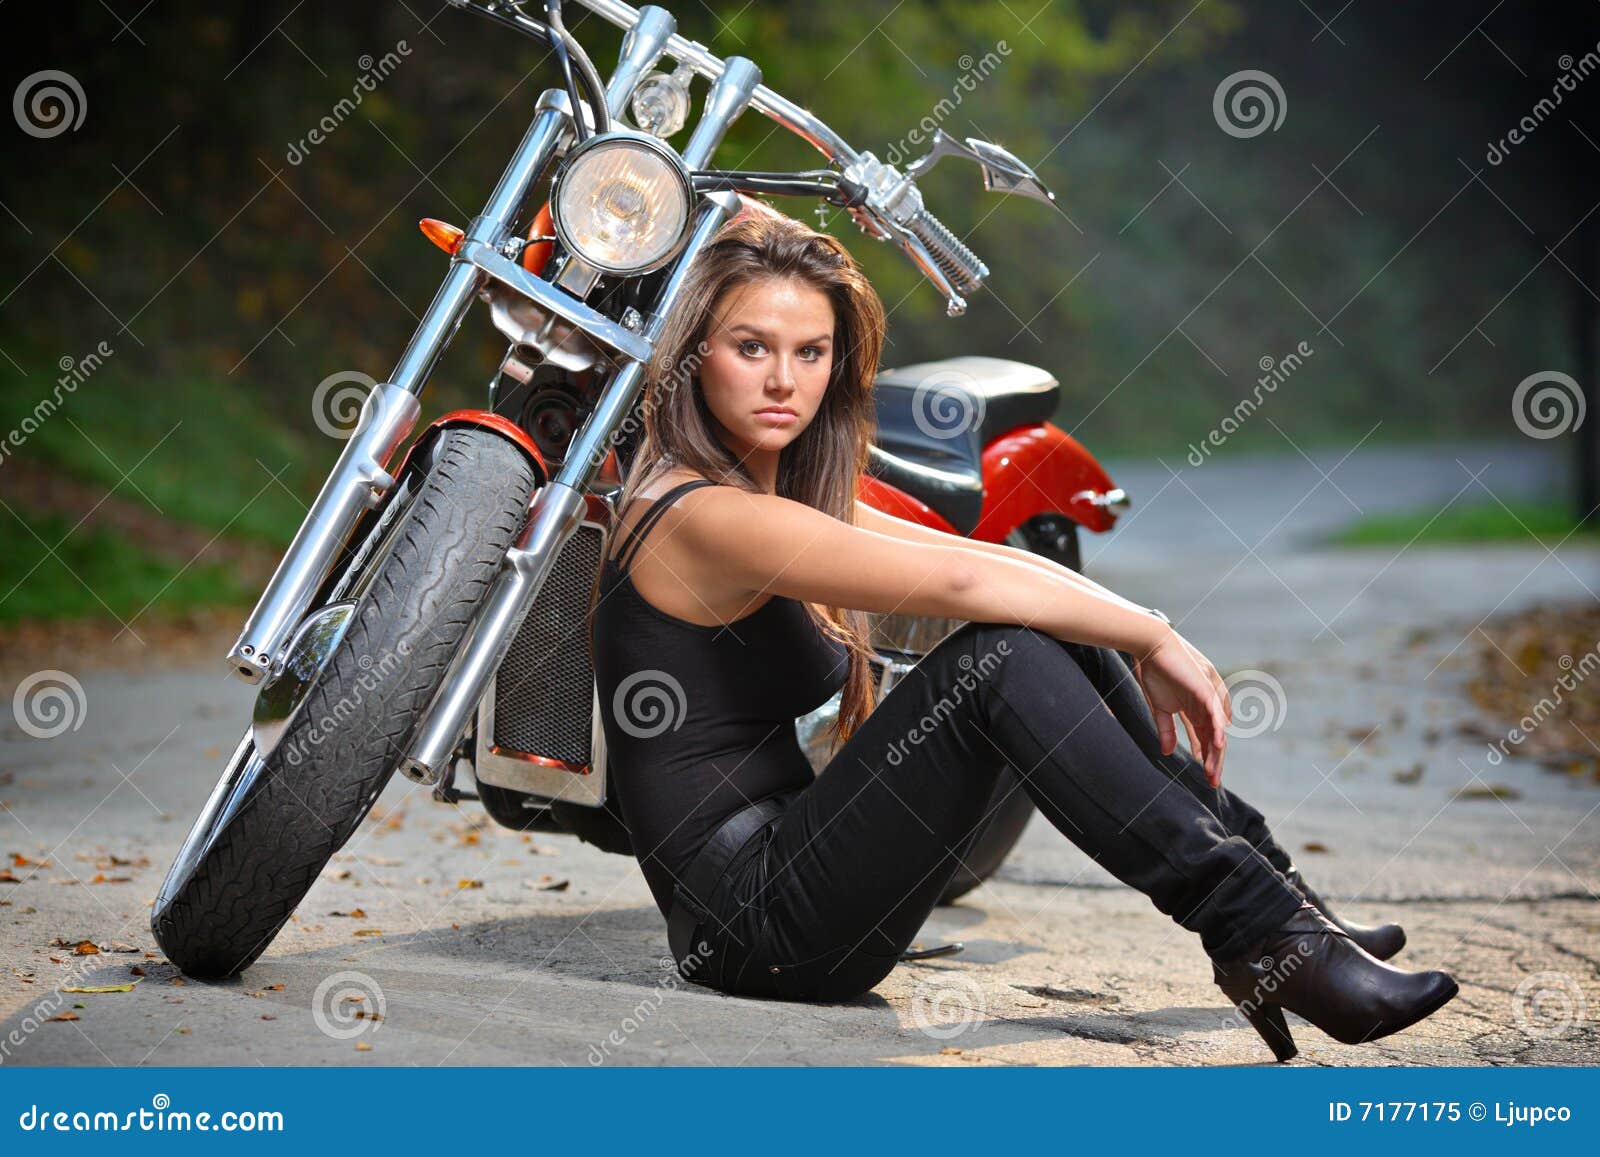 cody ronan add pictures of biker woman photo